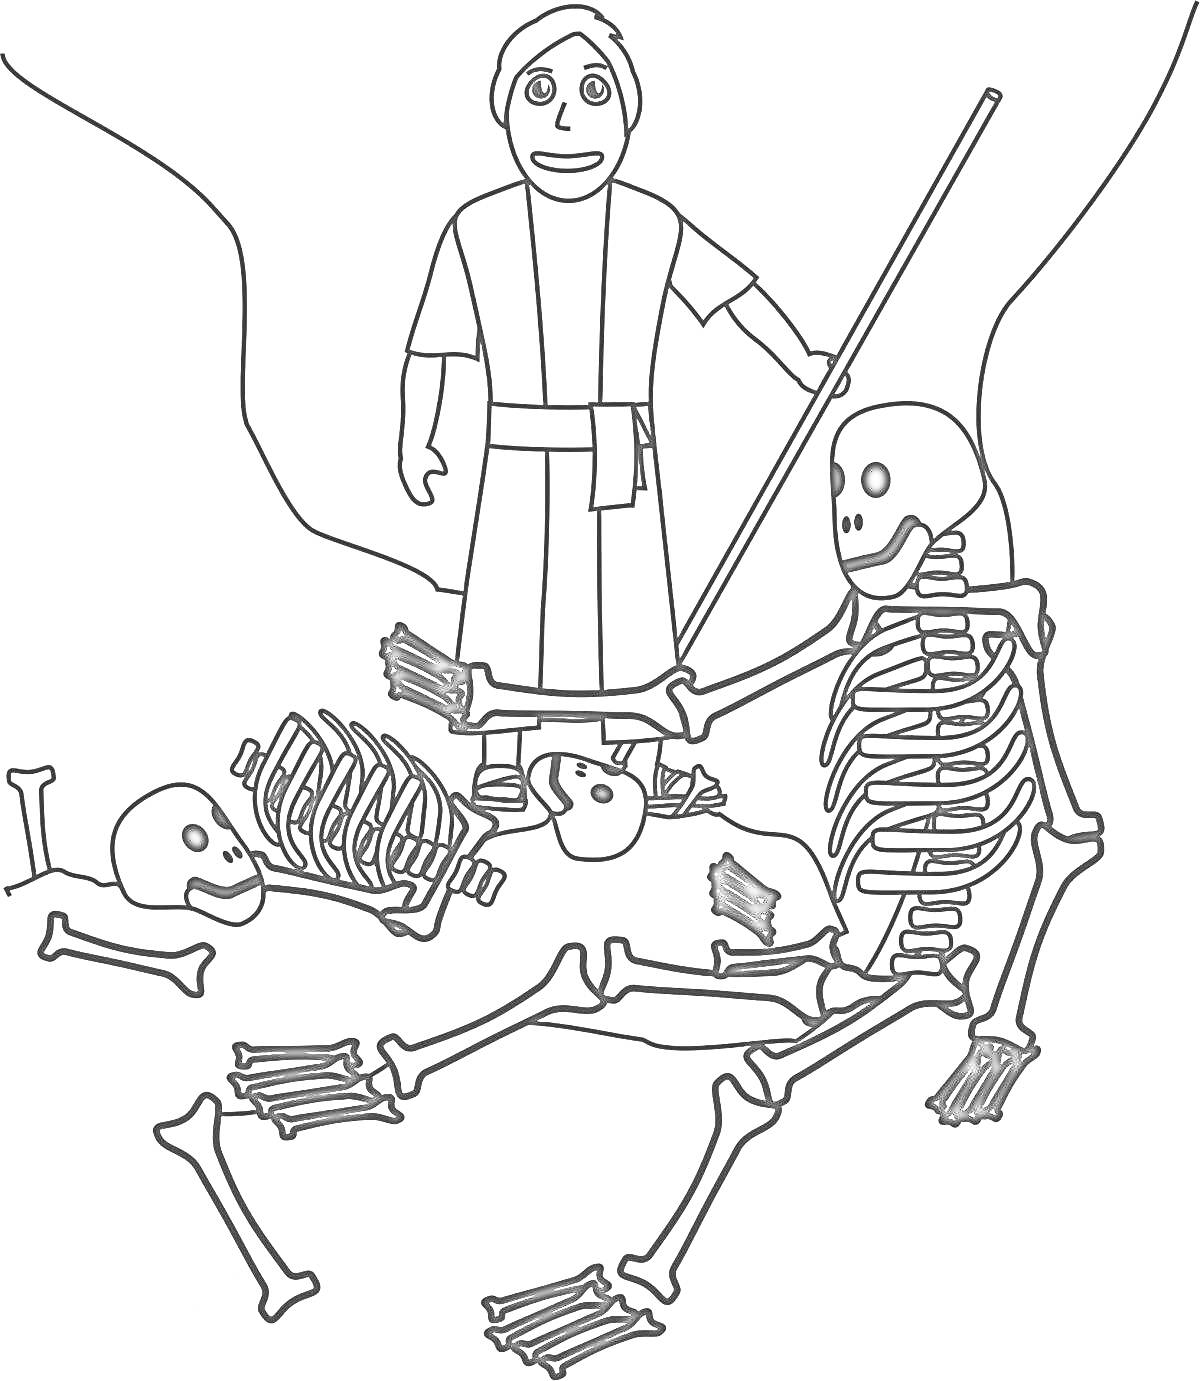 Раскраска Человек с посохом и три скелета на земле